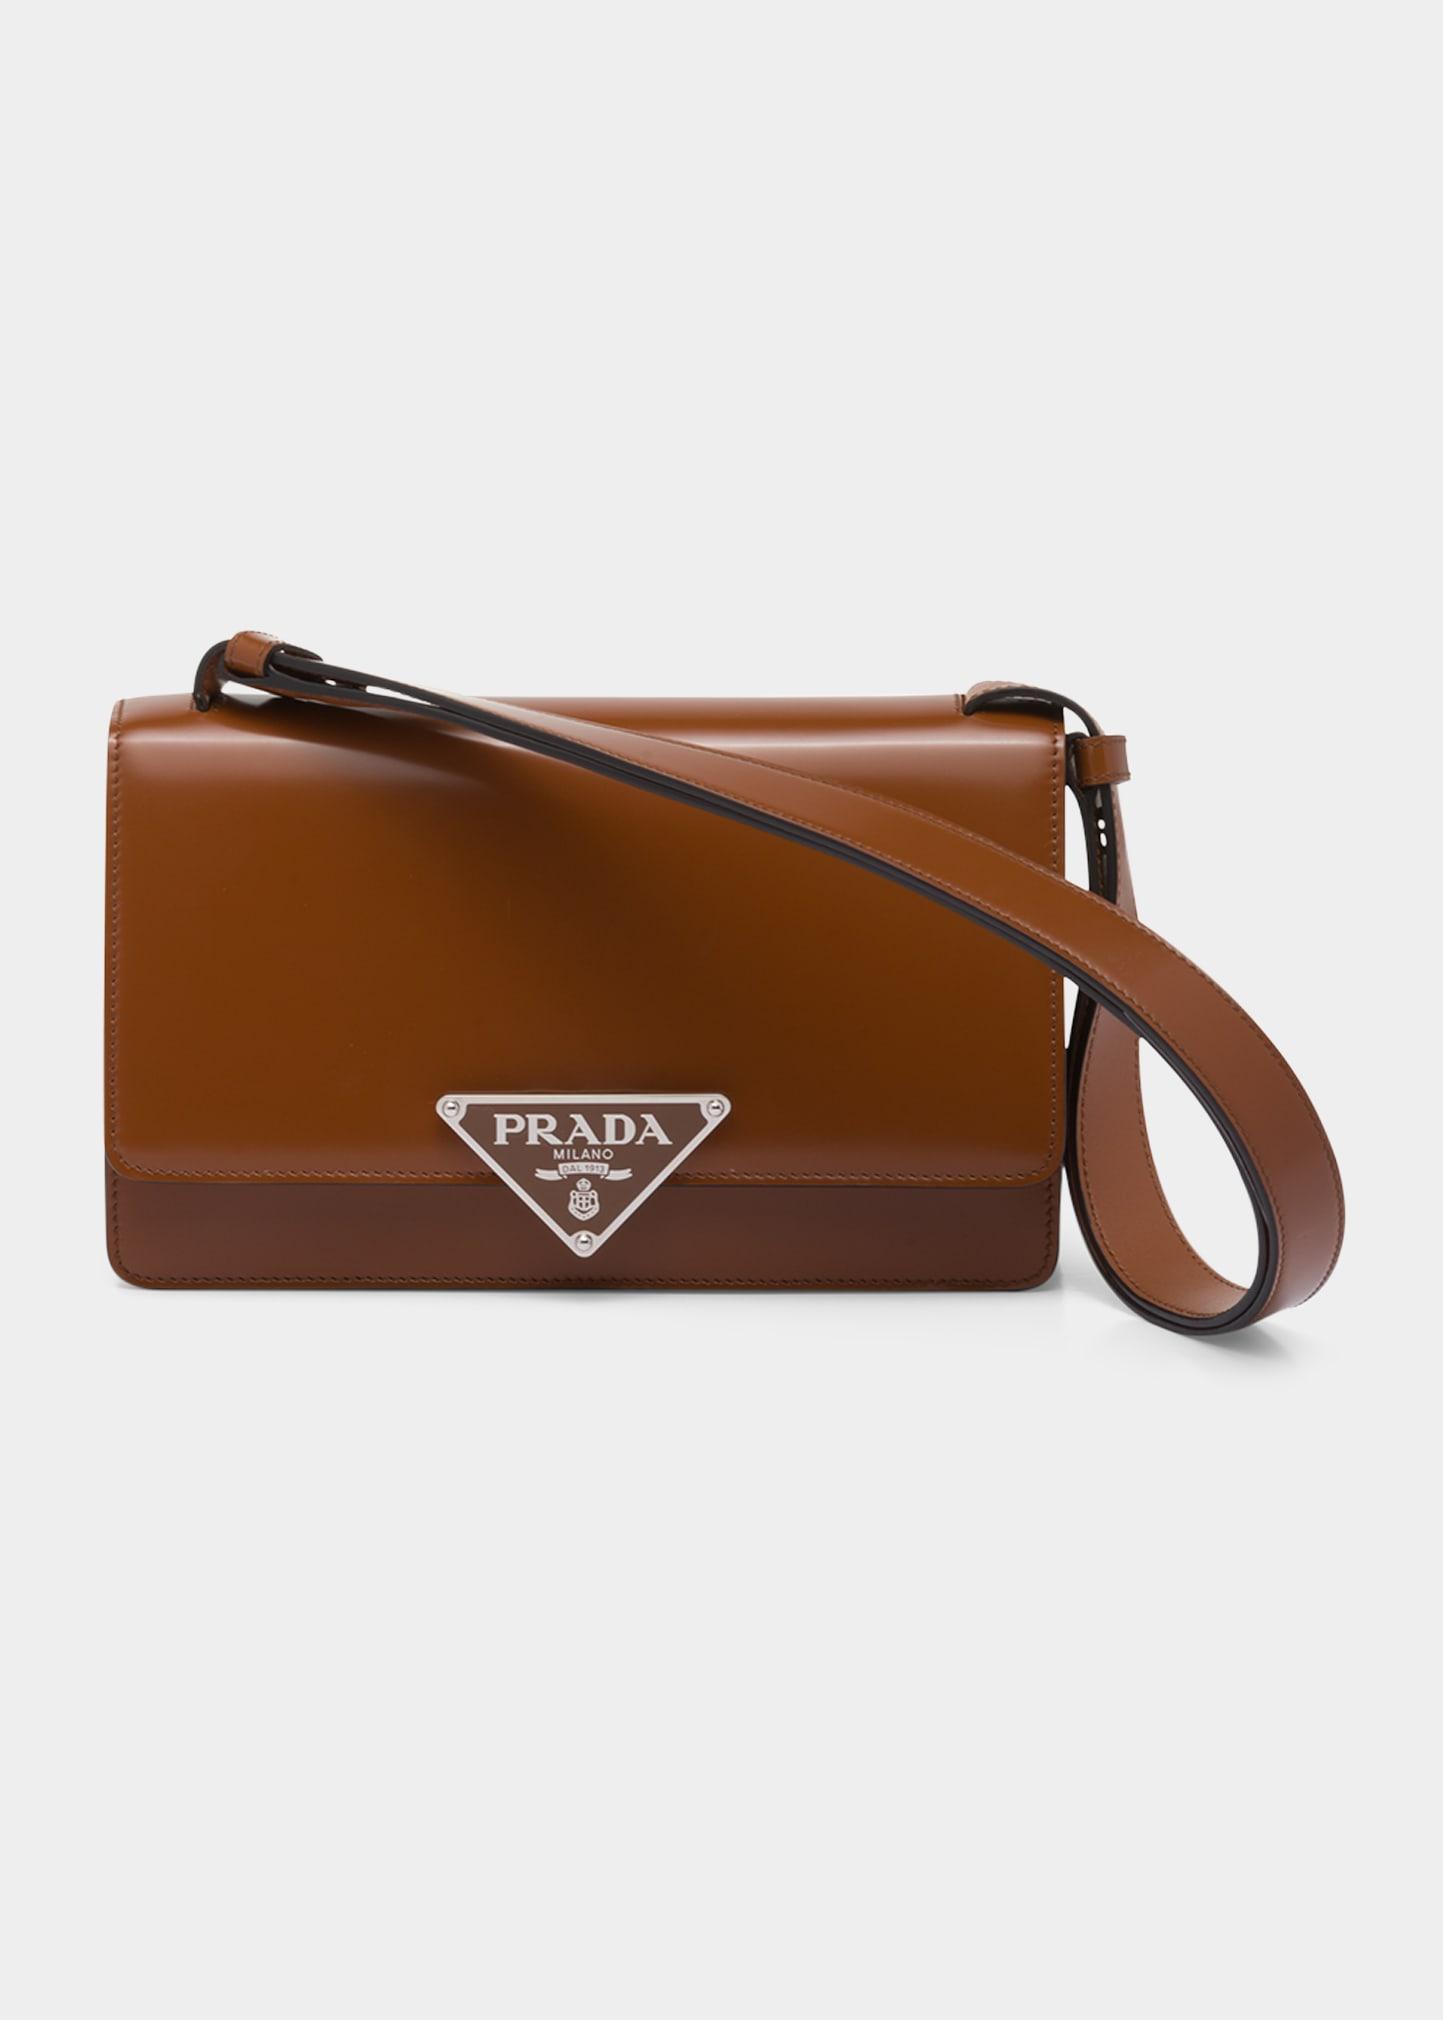 Prada Triangle Logo Spazzolato Leather Shoulder Bag in Brown | Lyst